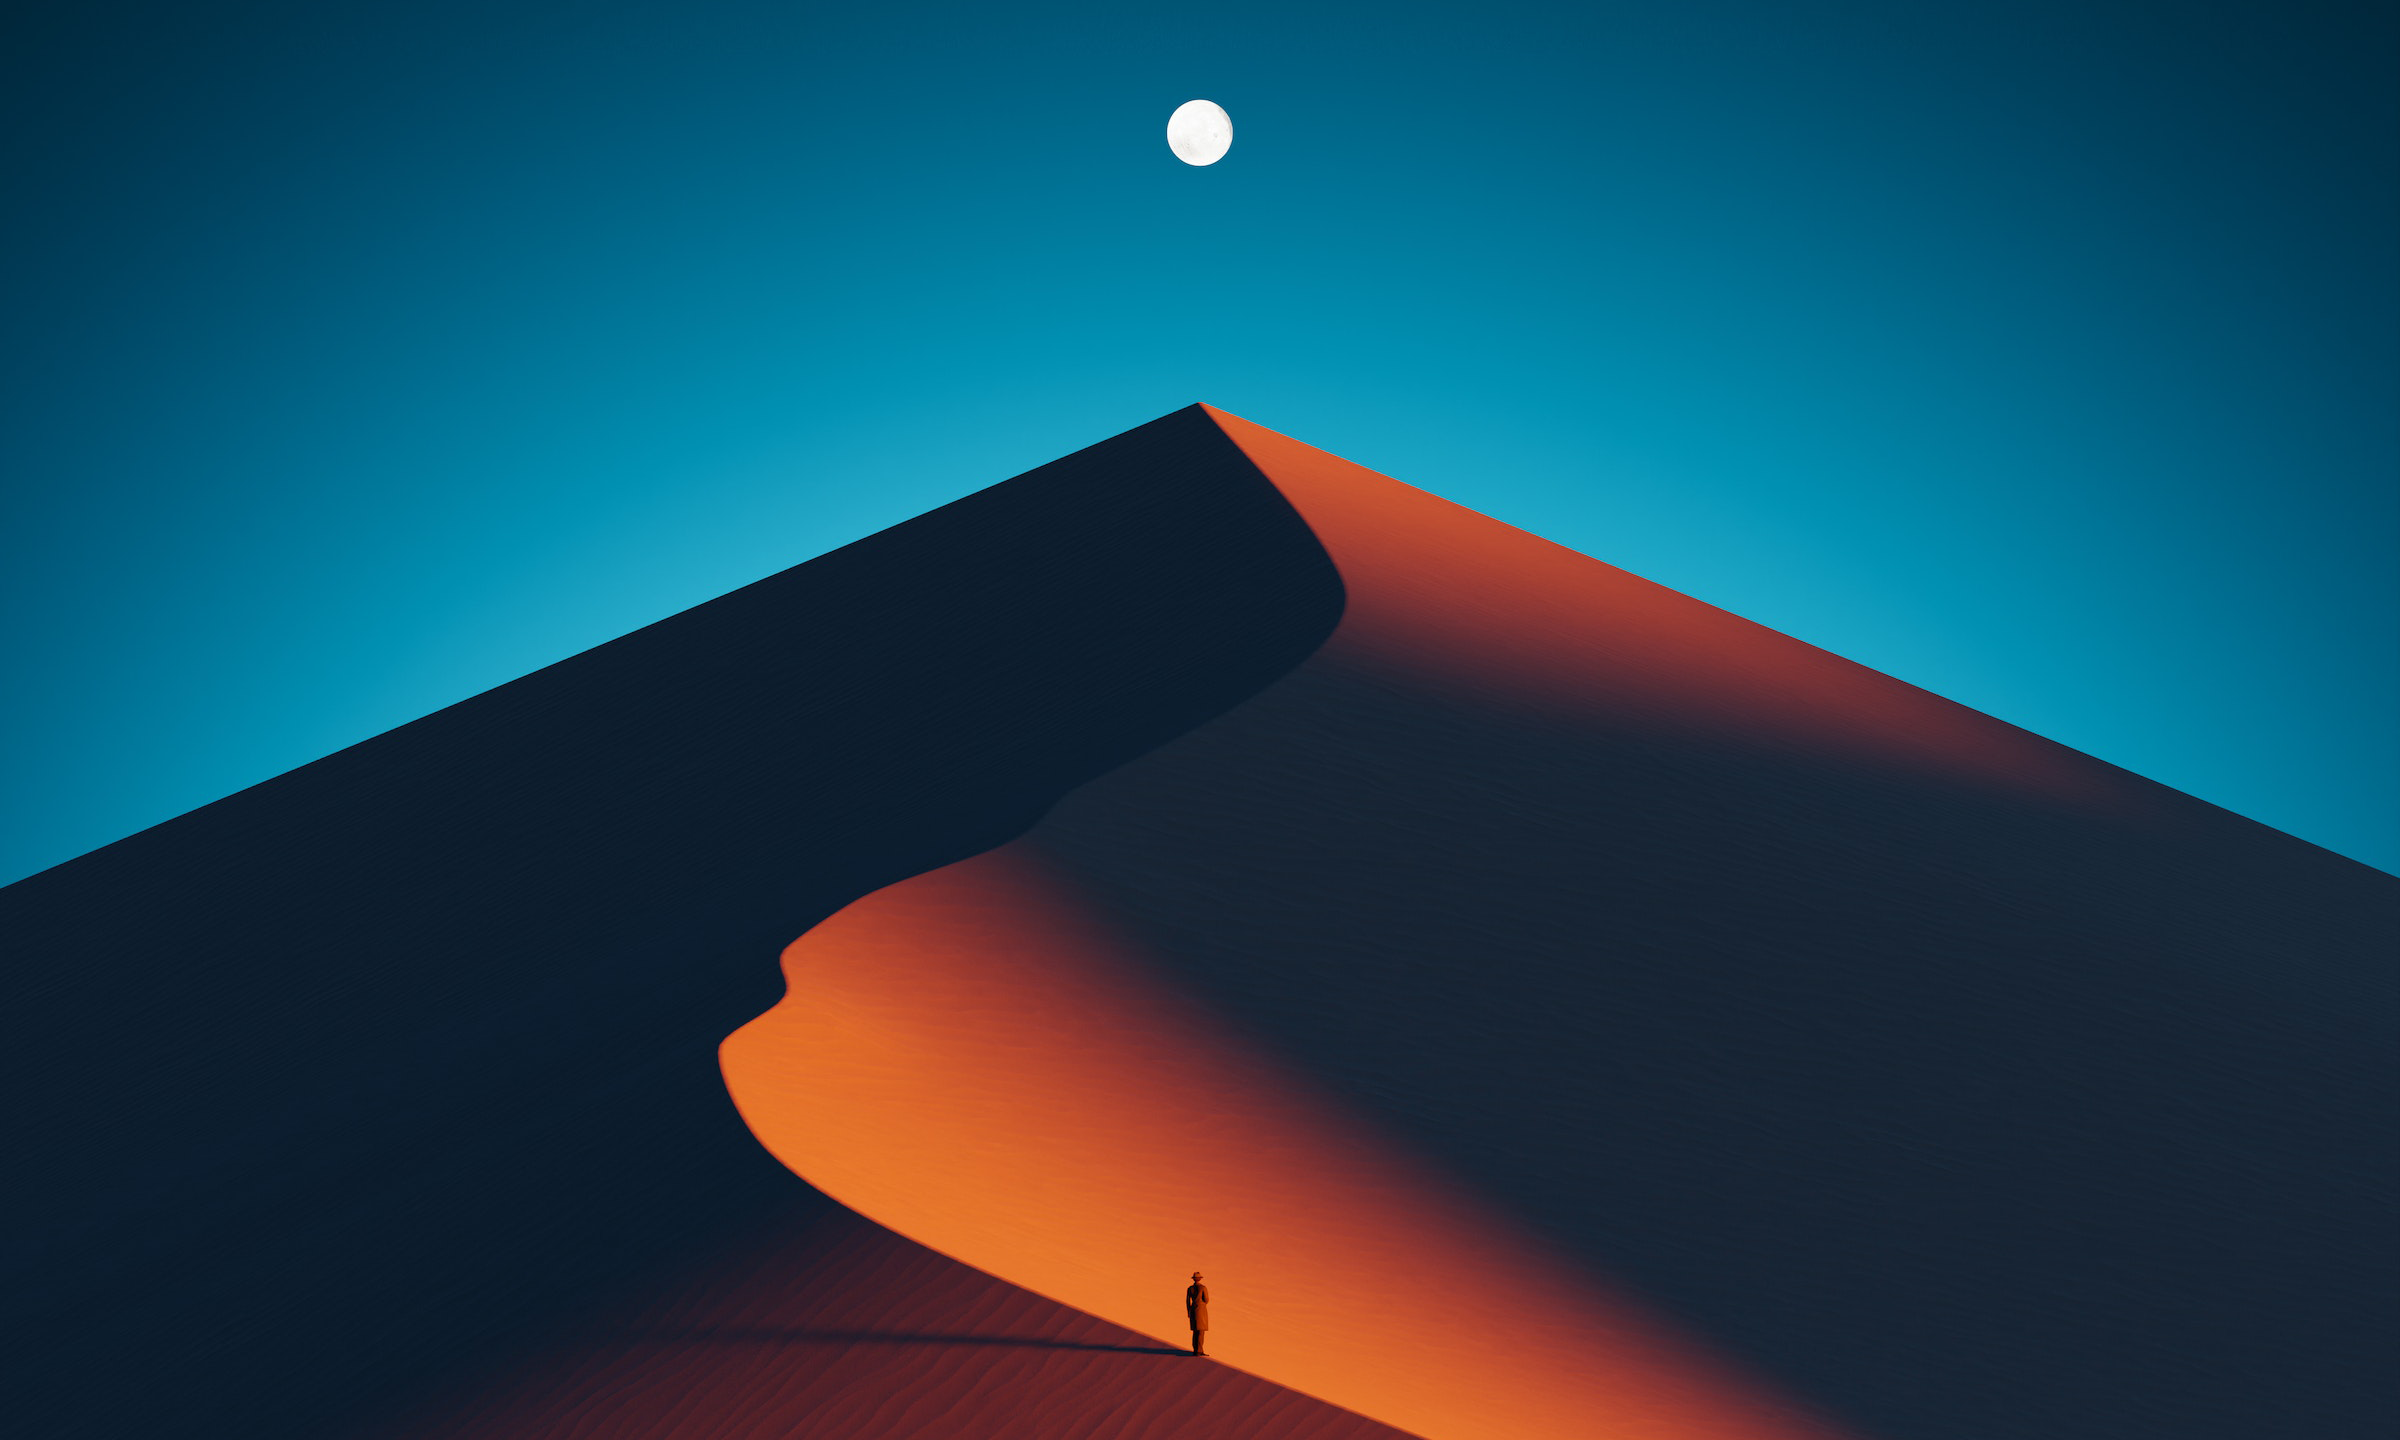 Digital Art Artwork Illustration Dunes Desert Landscape Sand Night Nightscape Nature Moon Simple Bac 2400x1440